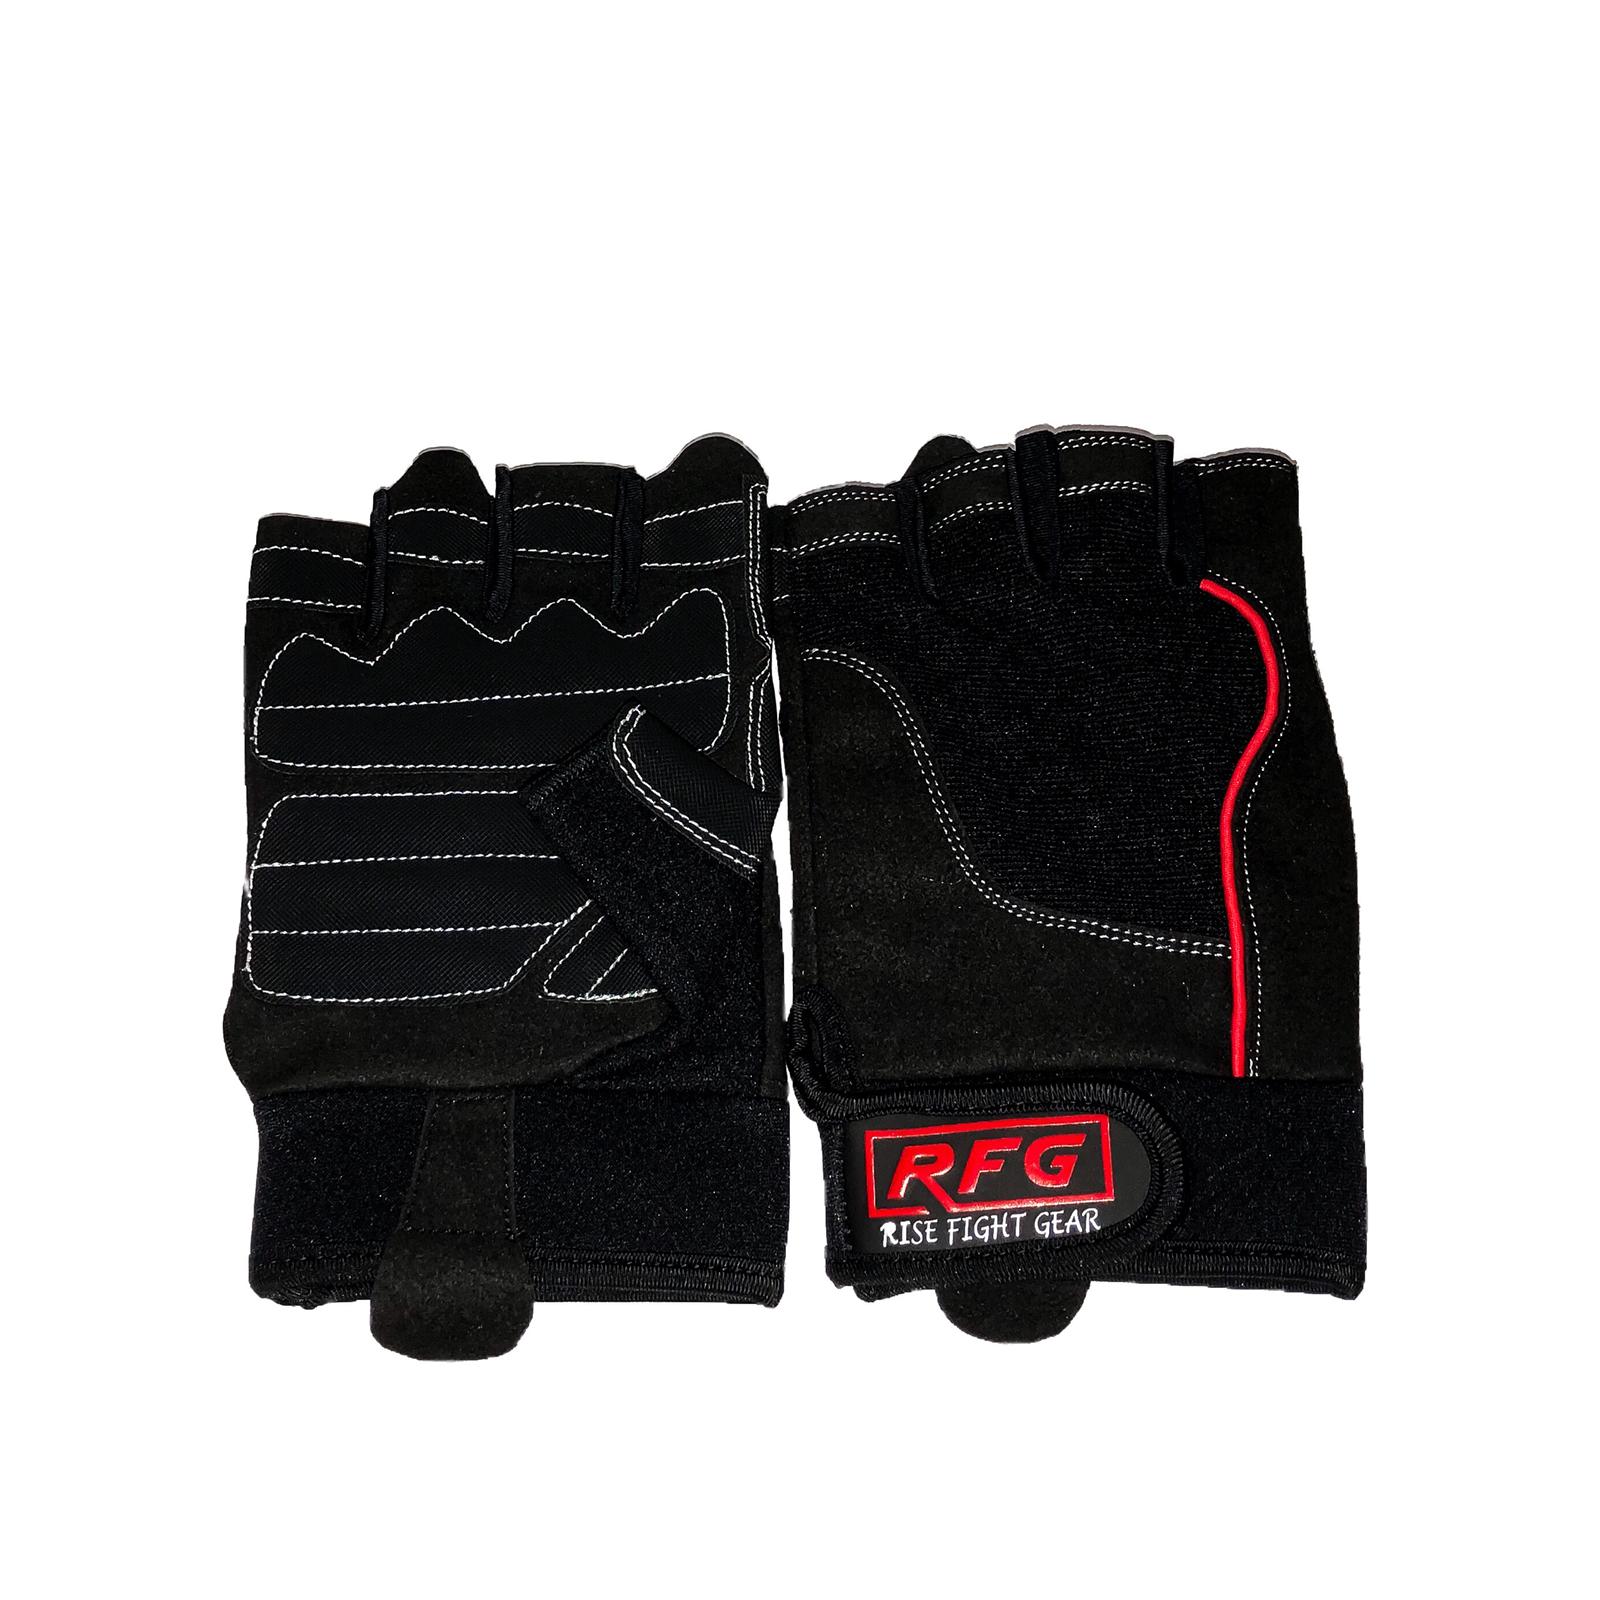 RFG - Weight Lifting/Gym Gloves - Medium